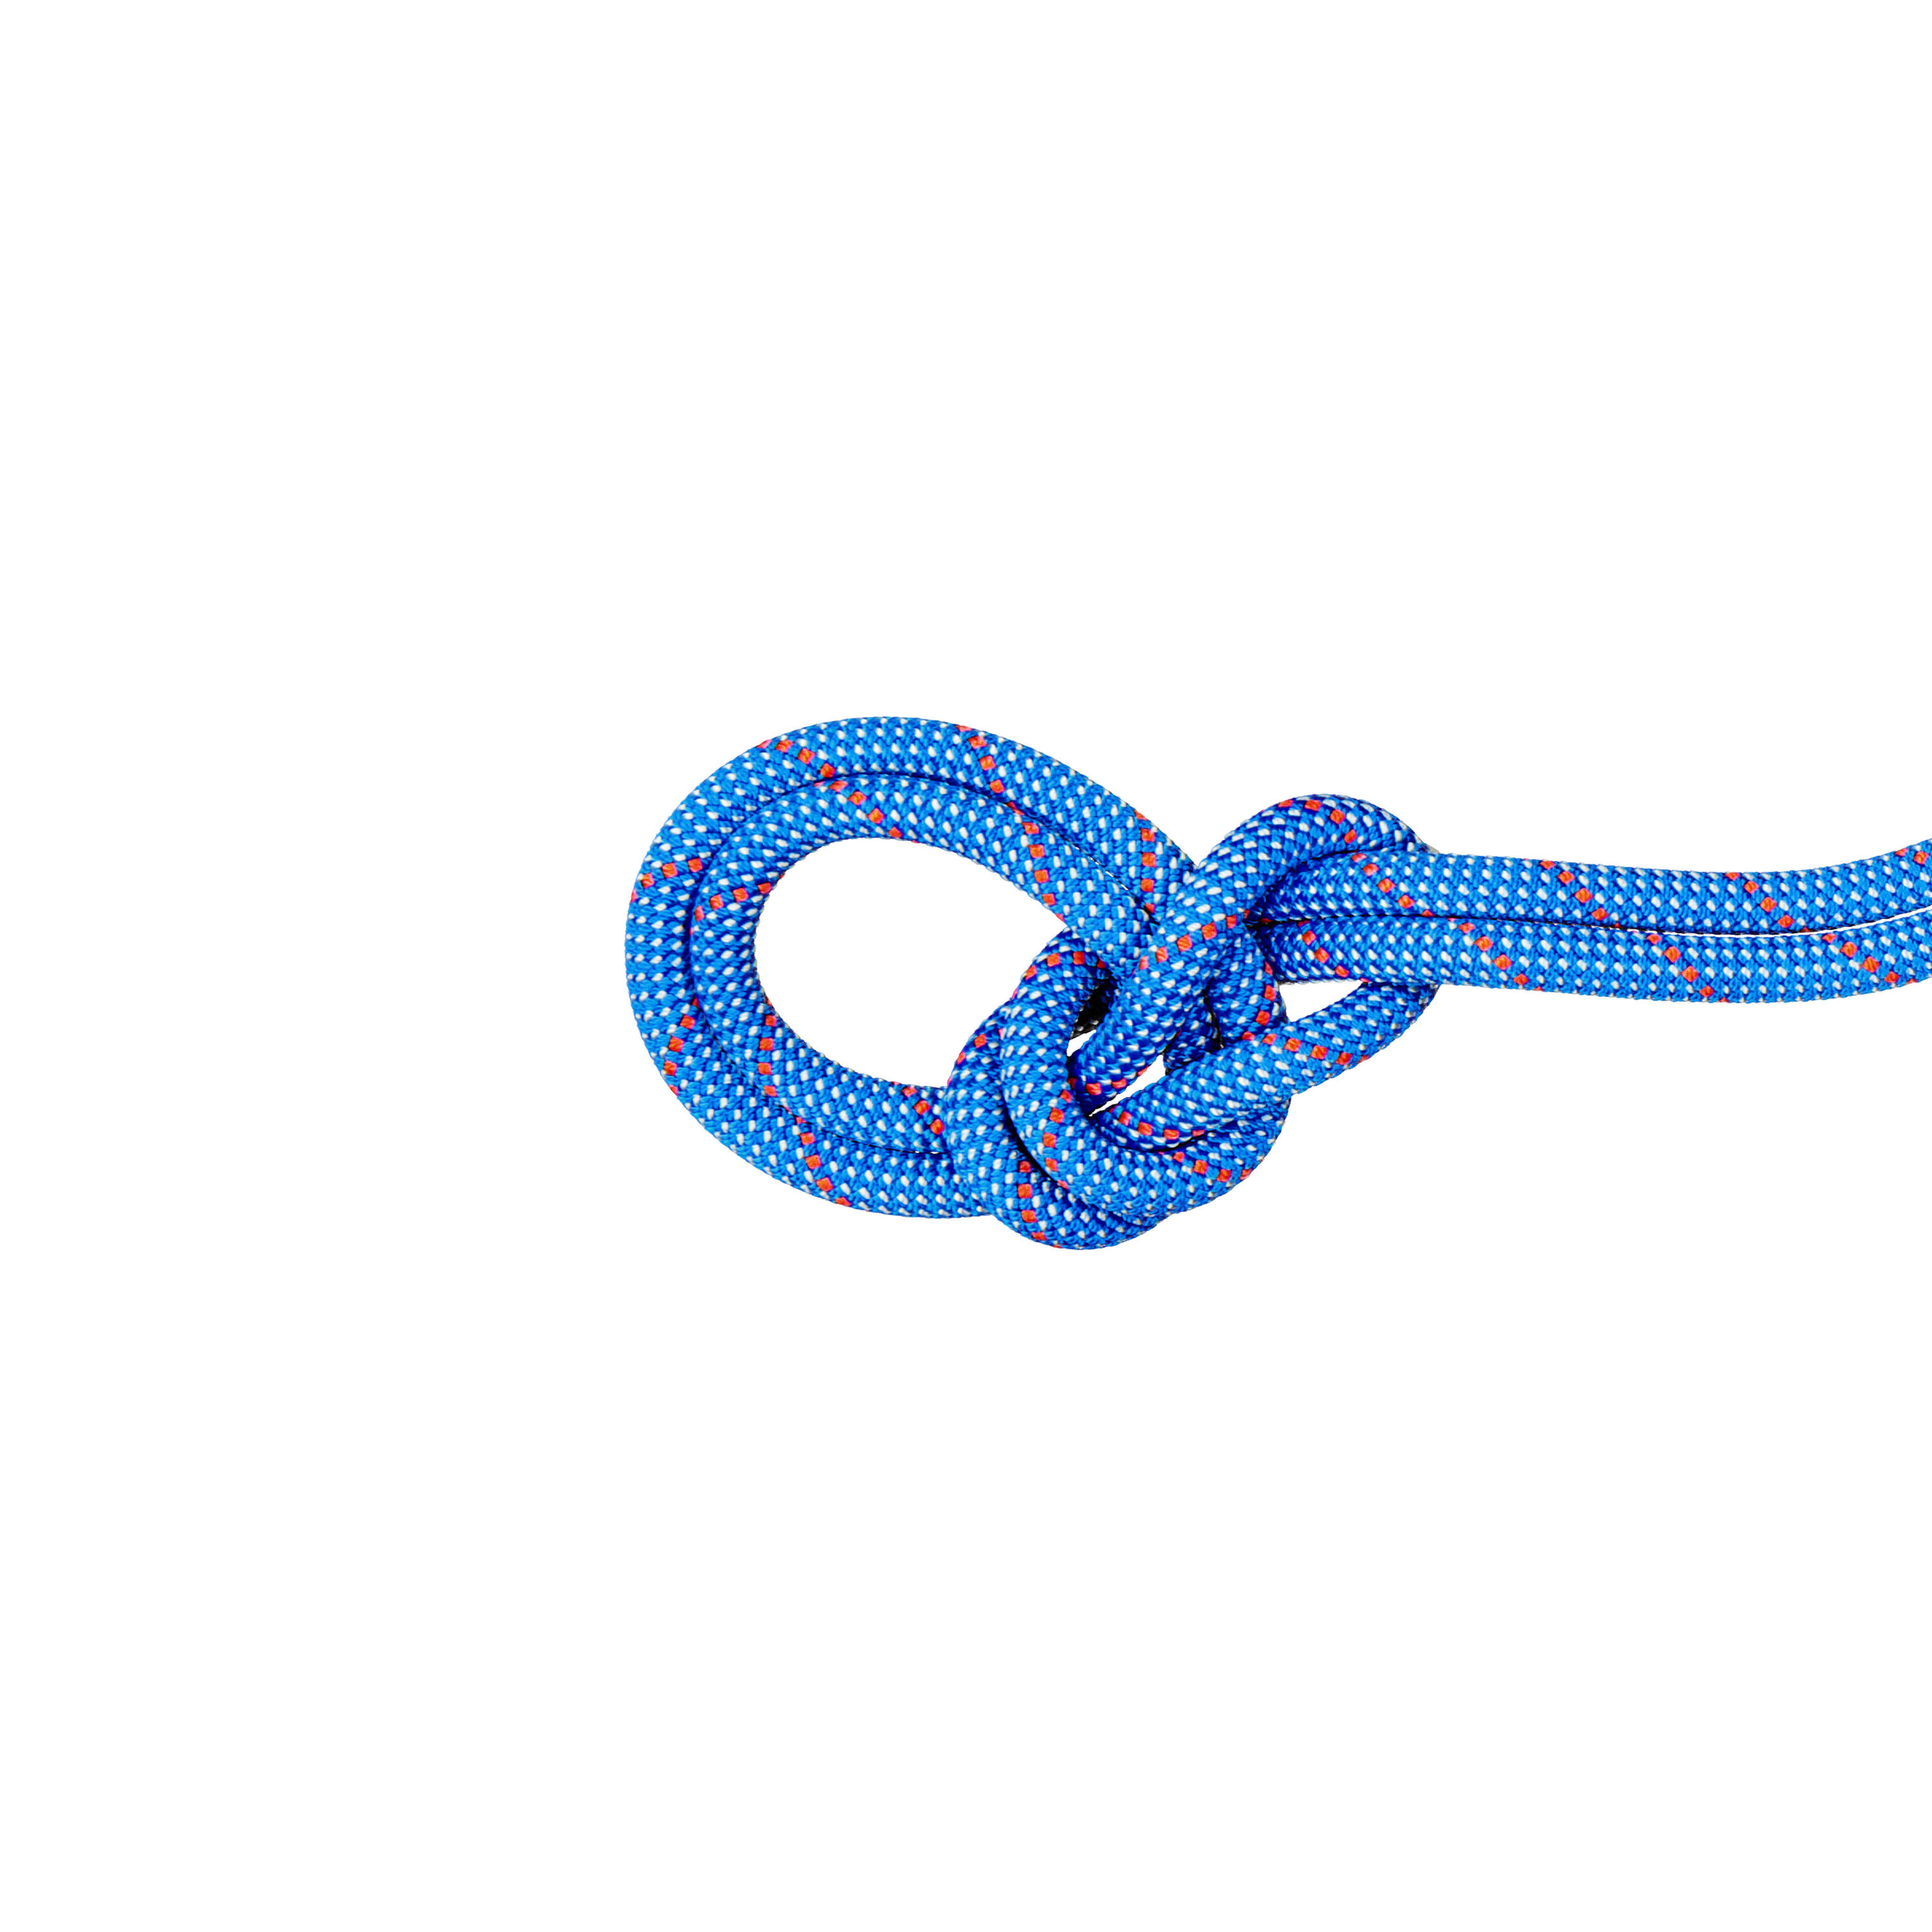 Crag Classic Single Rope 9.5 mm x 50m - Blue 1/4